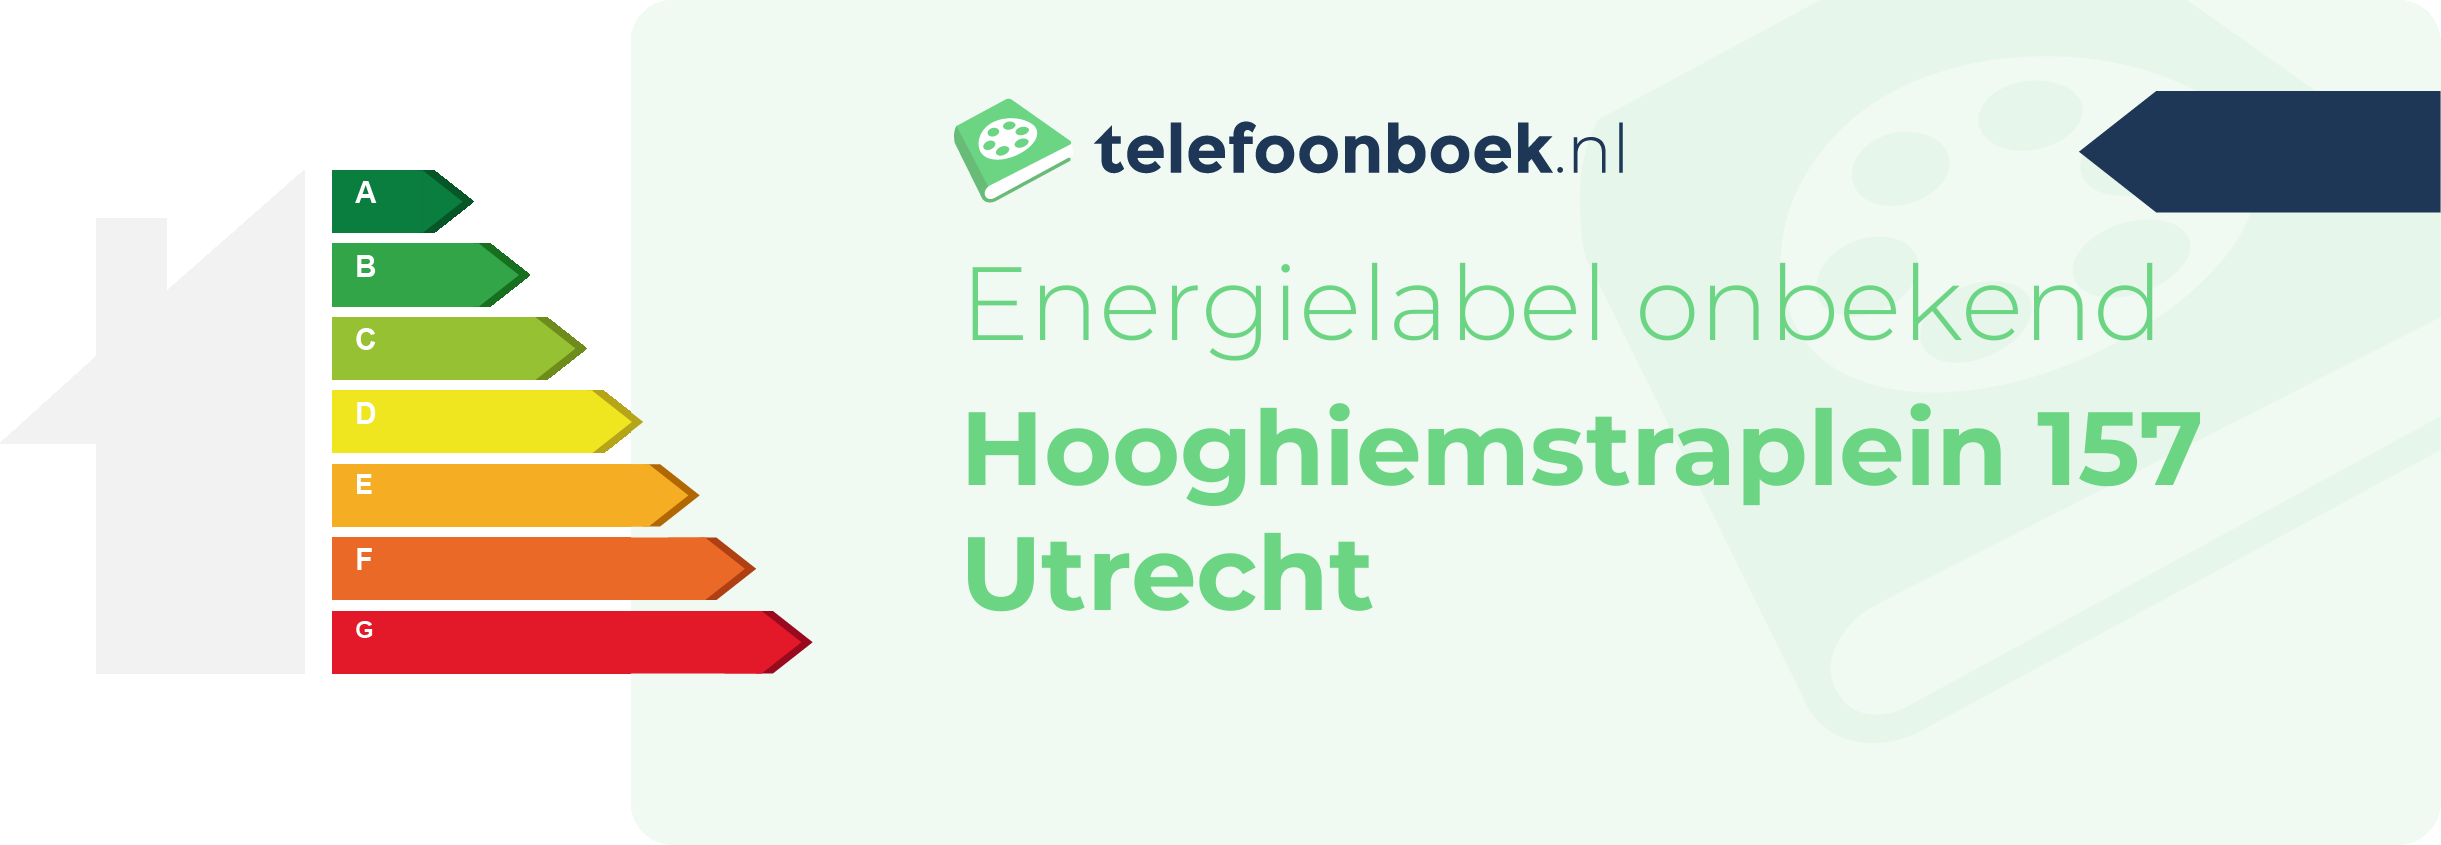 Energielabel Hooghiemstraplein 157 Utrecht